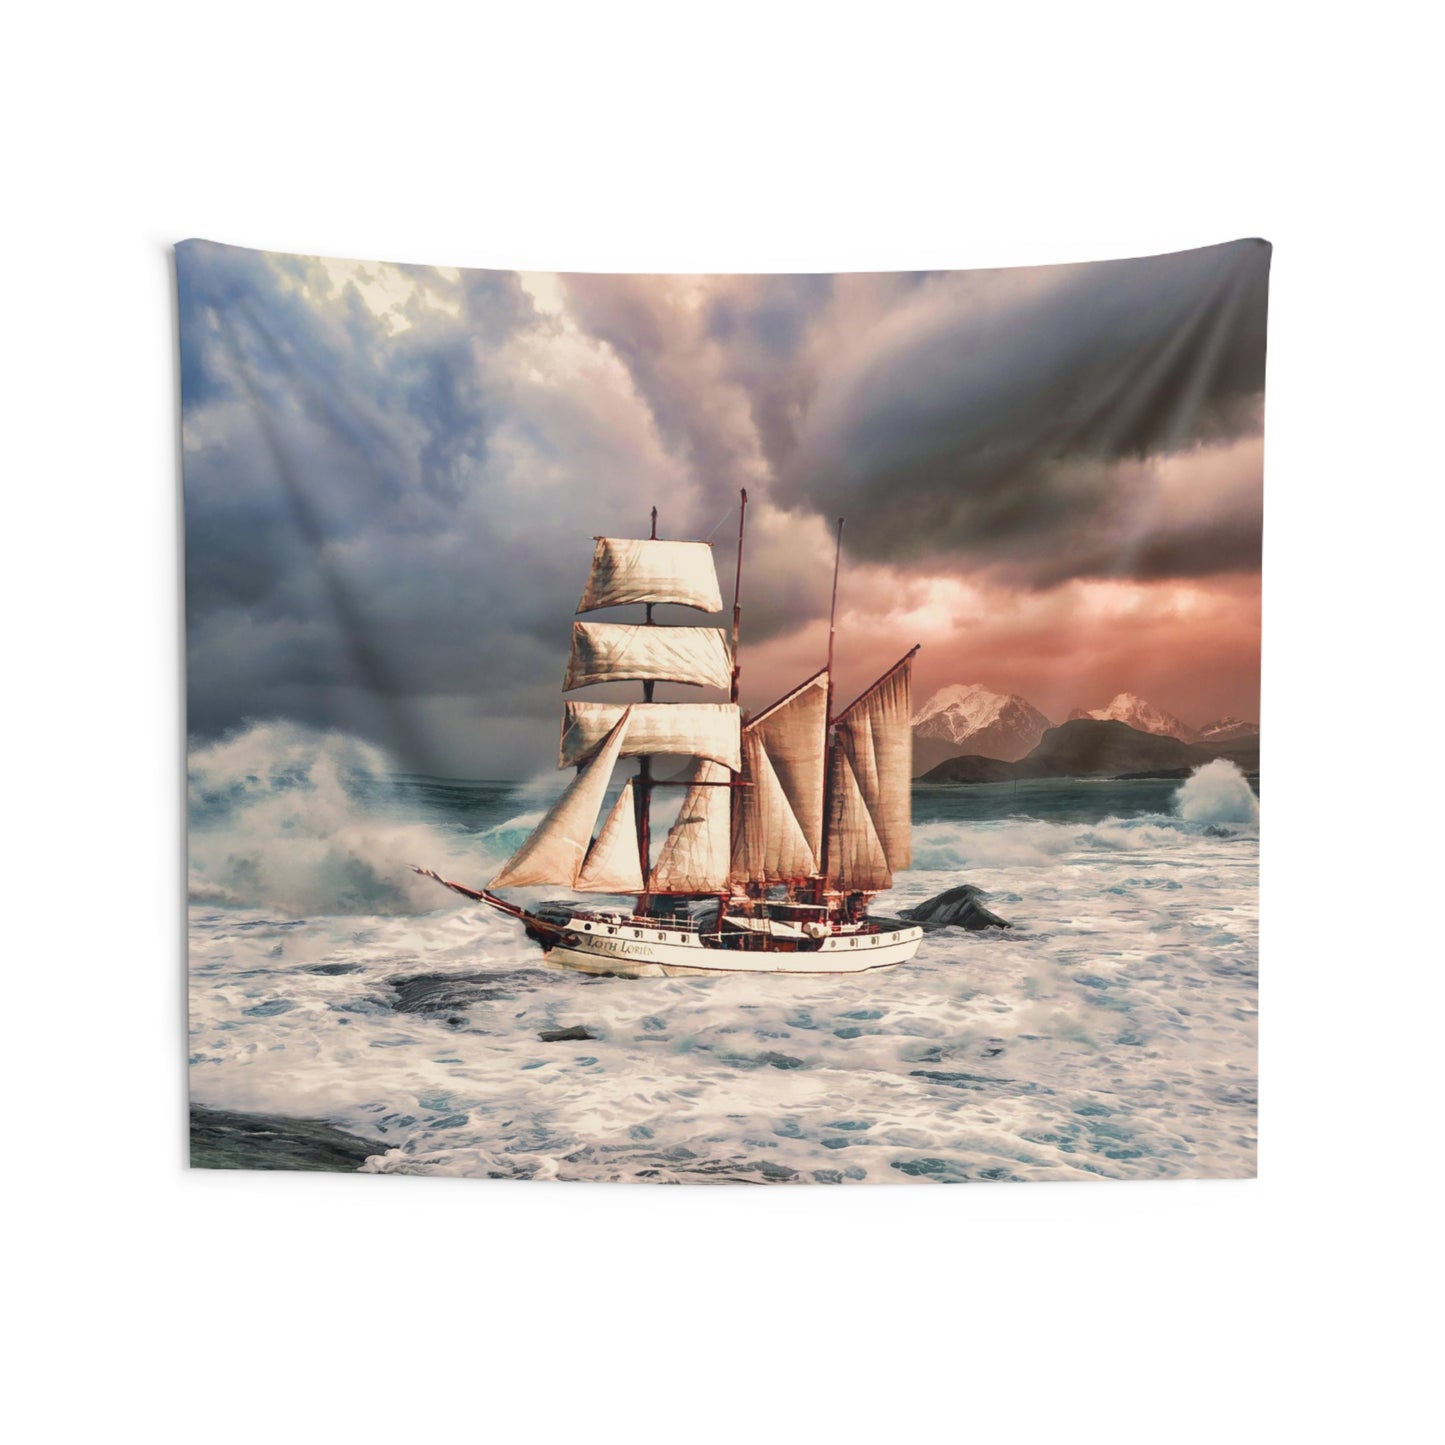 Stormship Tapestry